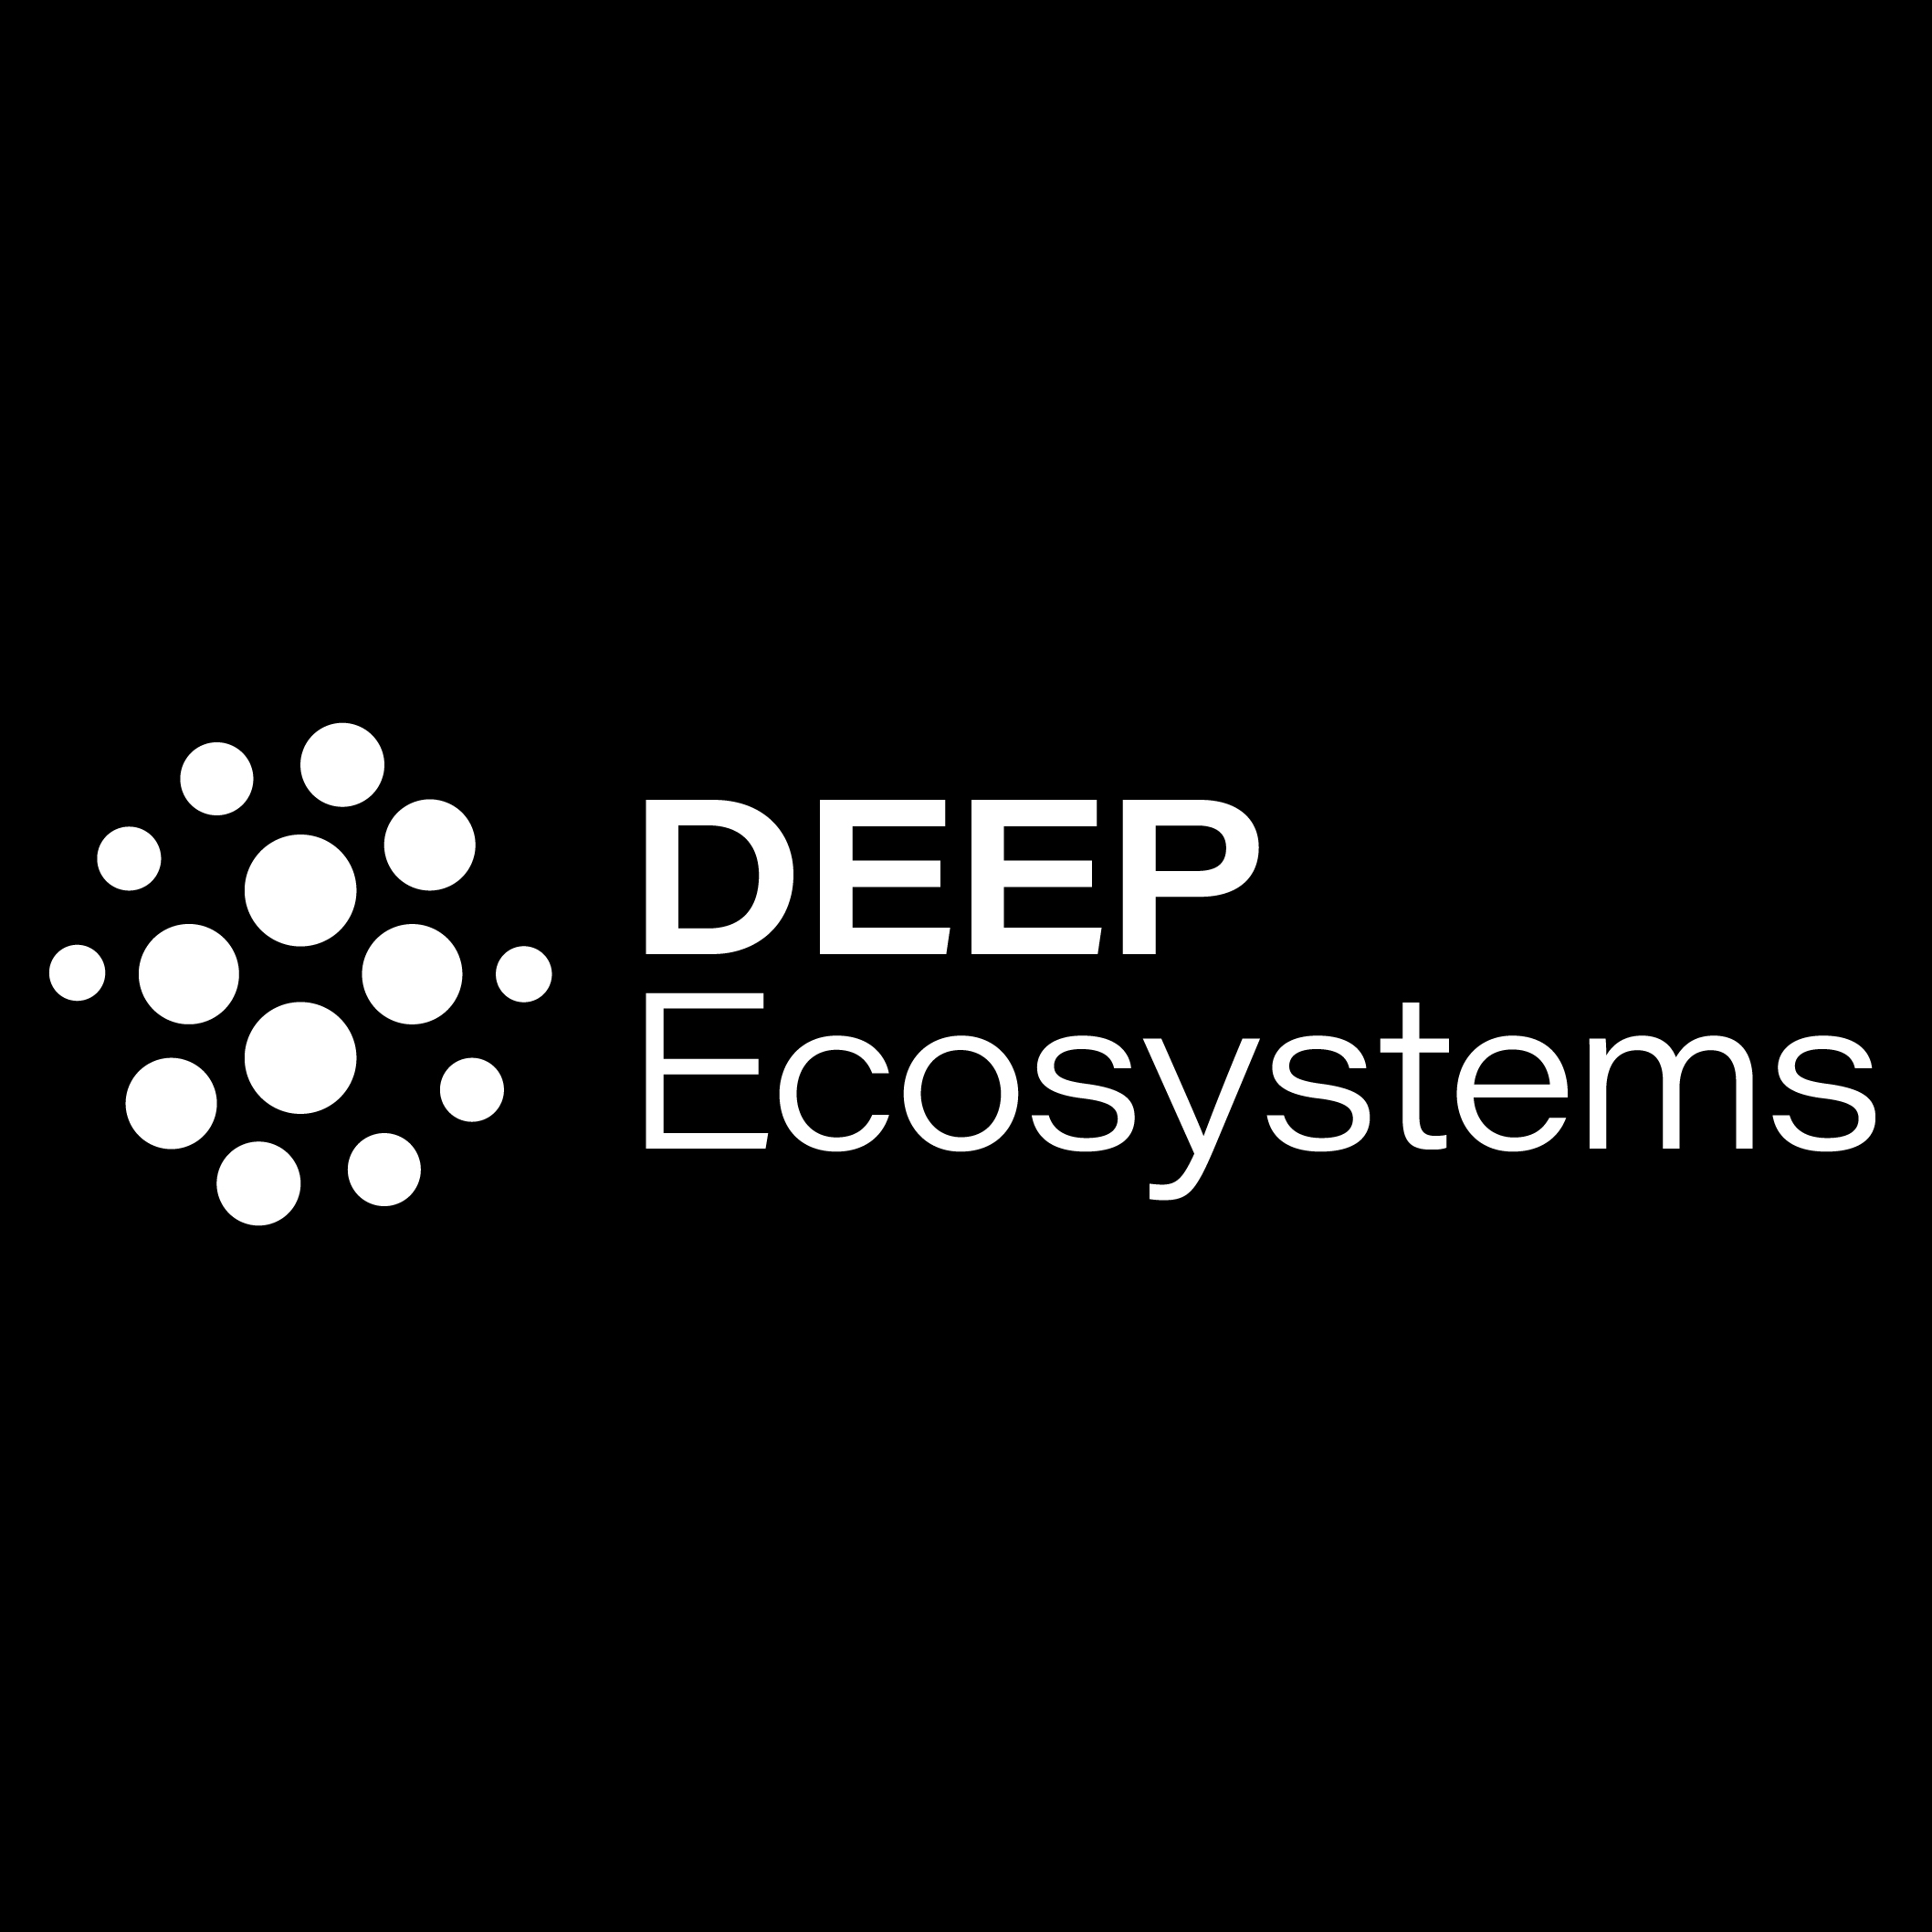 DEEP Ecosystems